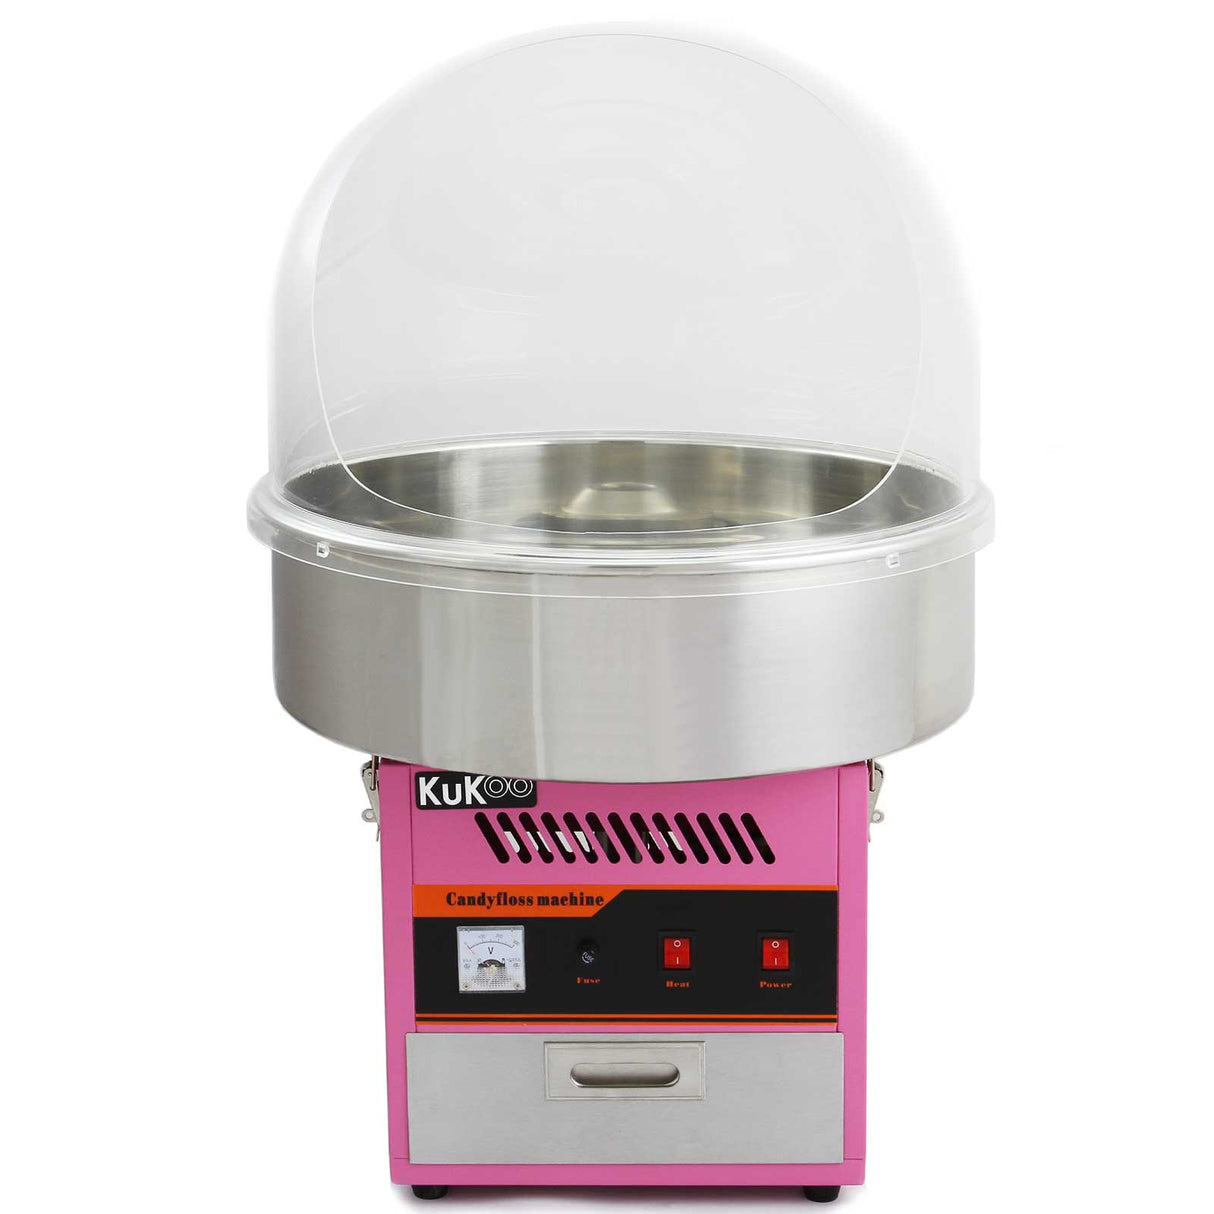 KuKoo Candy Floss Machine Protective Dome